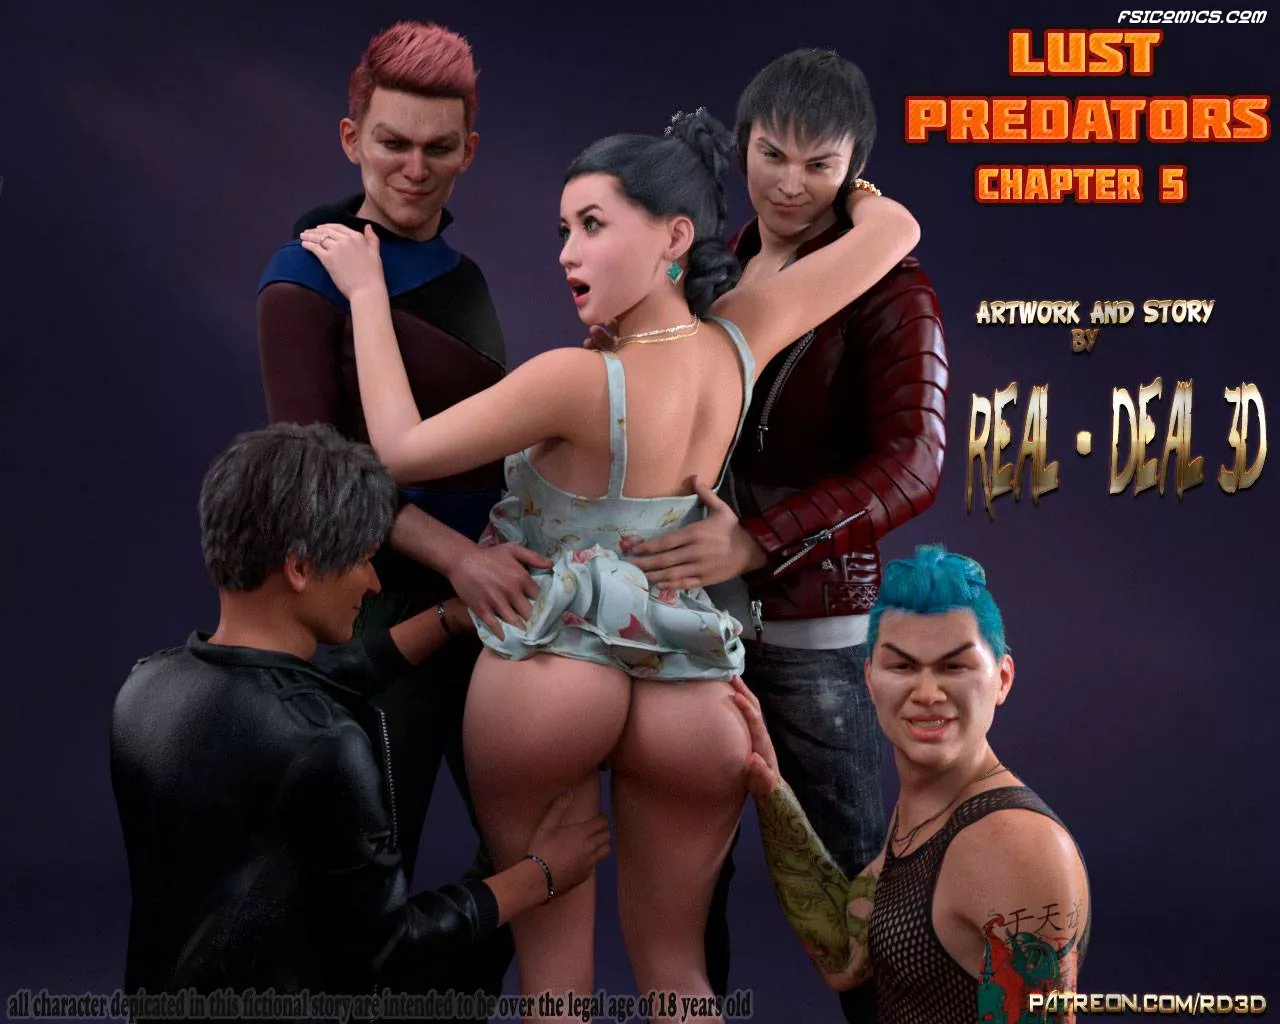 Lust Predators Chapter 5 - Real Deal 3D - 233 - FSIComics